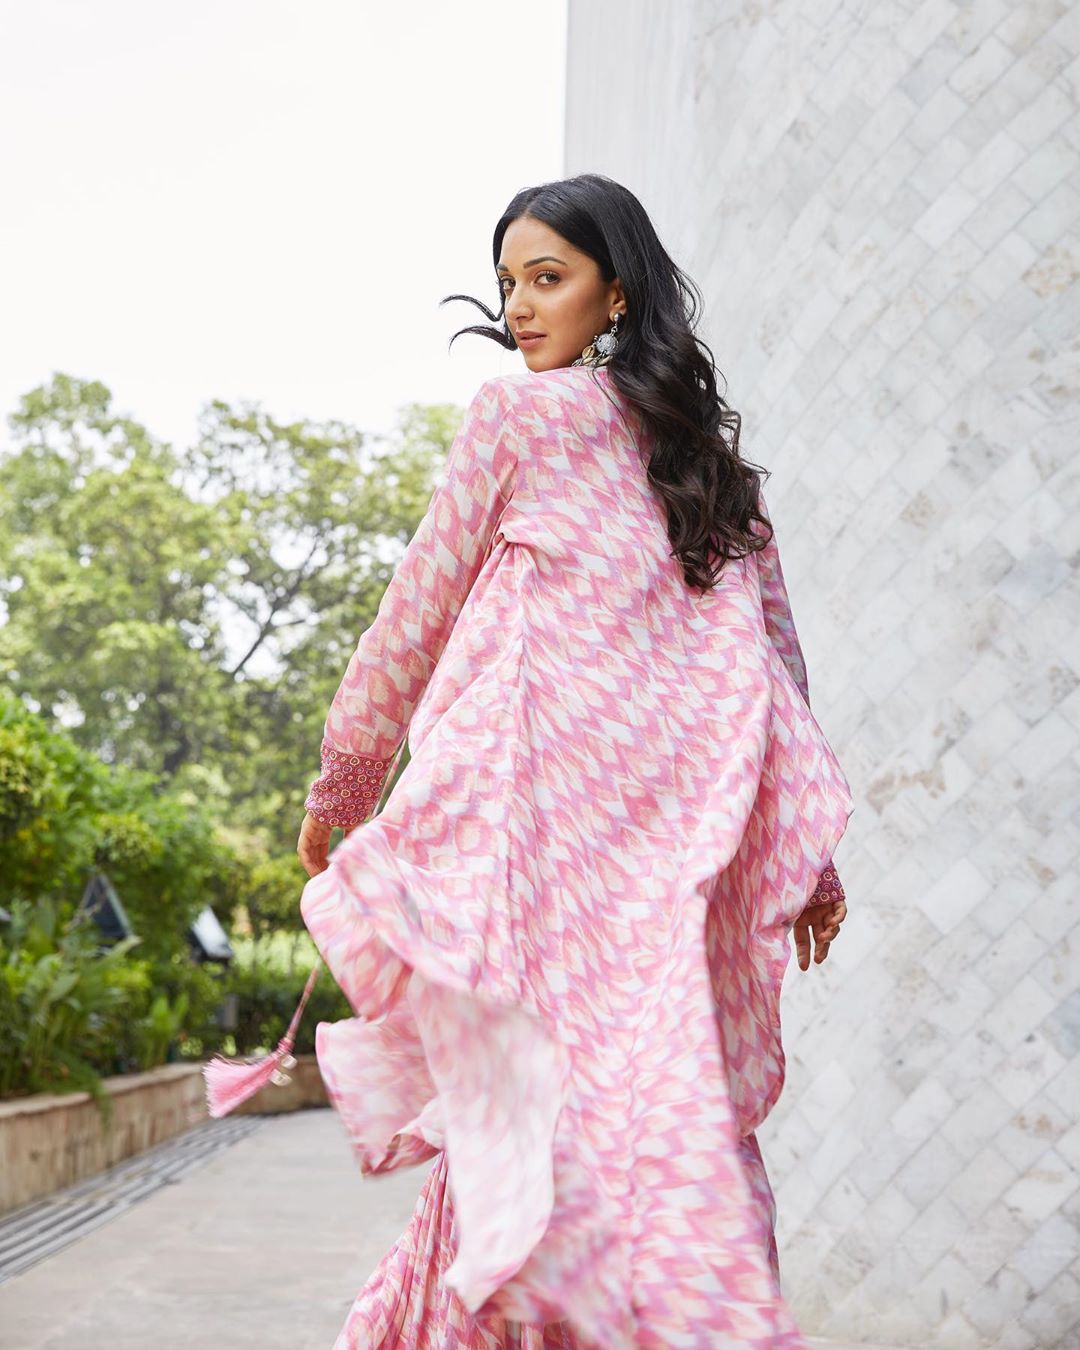 Hot Pink Photos Of Kiara Advani As Her Birthday Treat